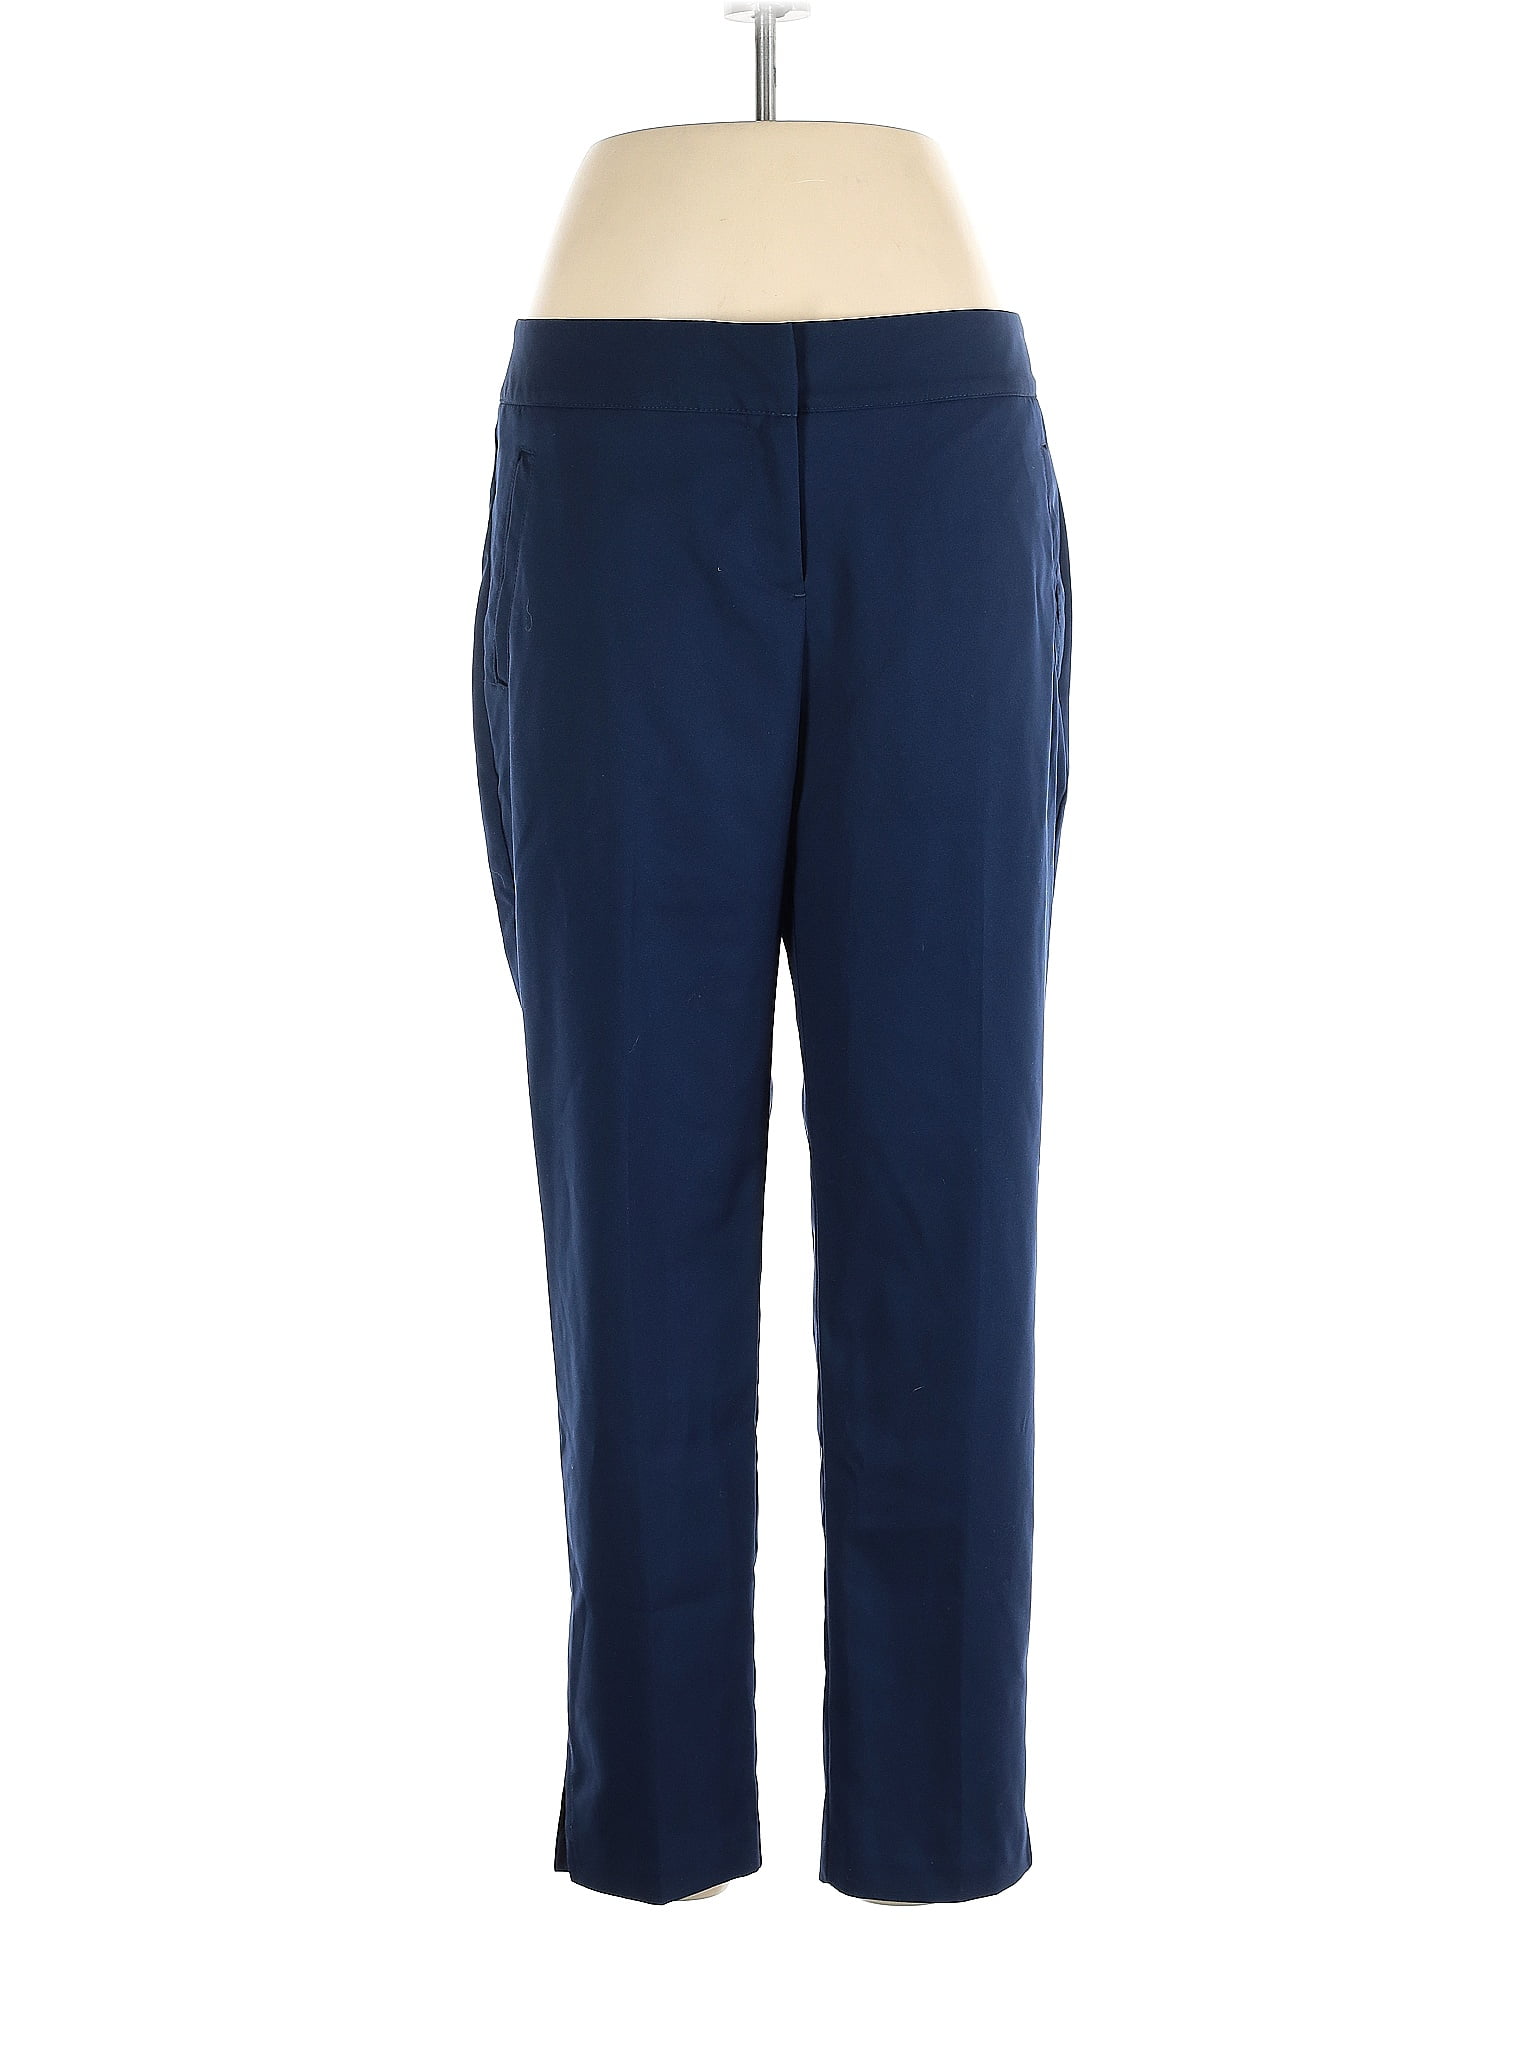 Izod Golf 100% Polyester Solid Navy Blue Dress Pants Size 6 - 74% off ...